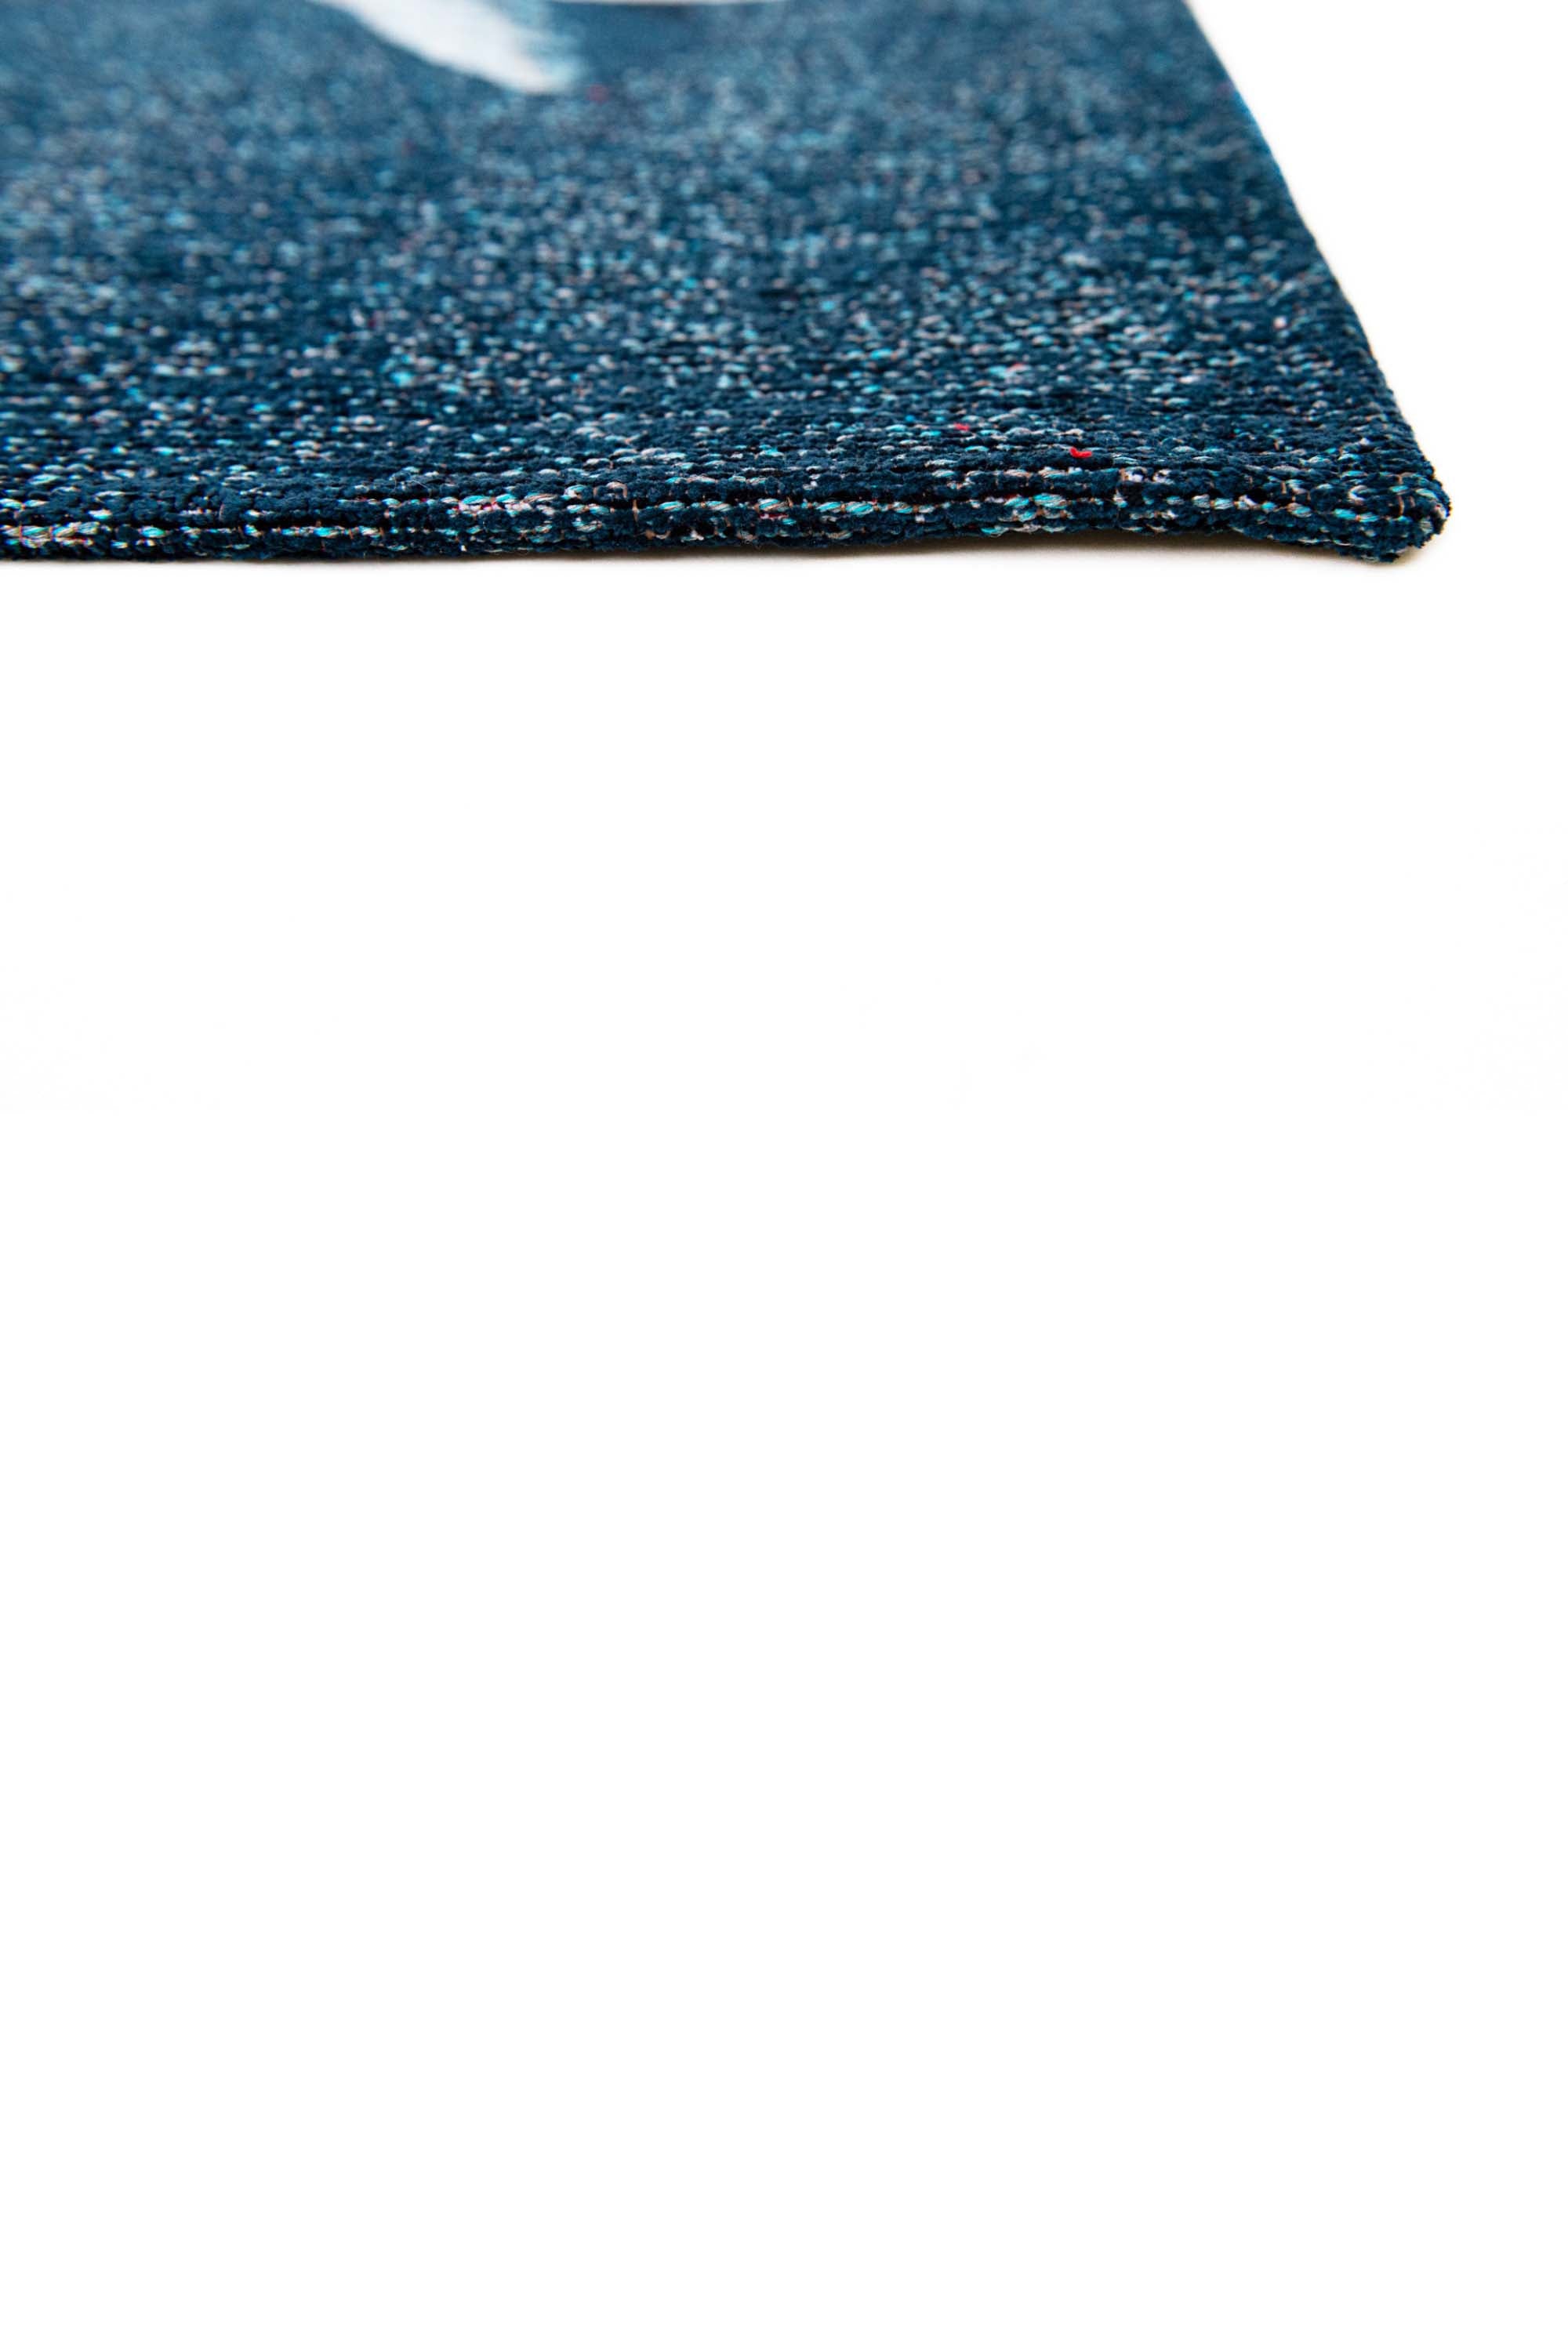 Modern navy rug with detailed koi fish print